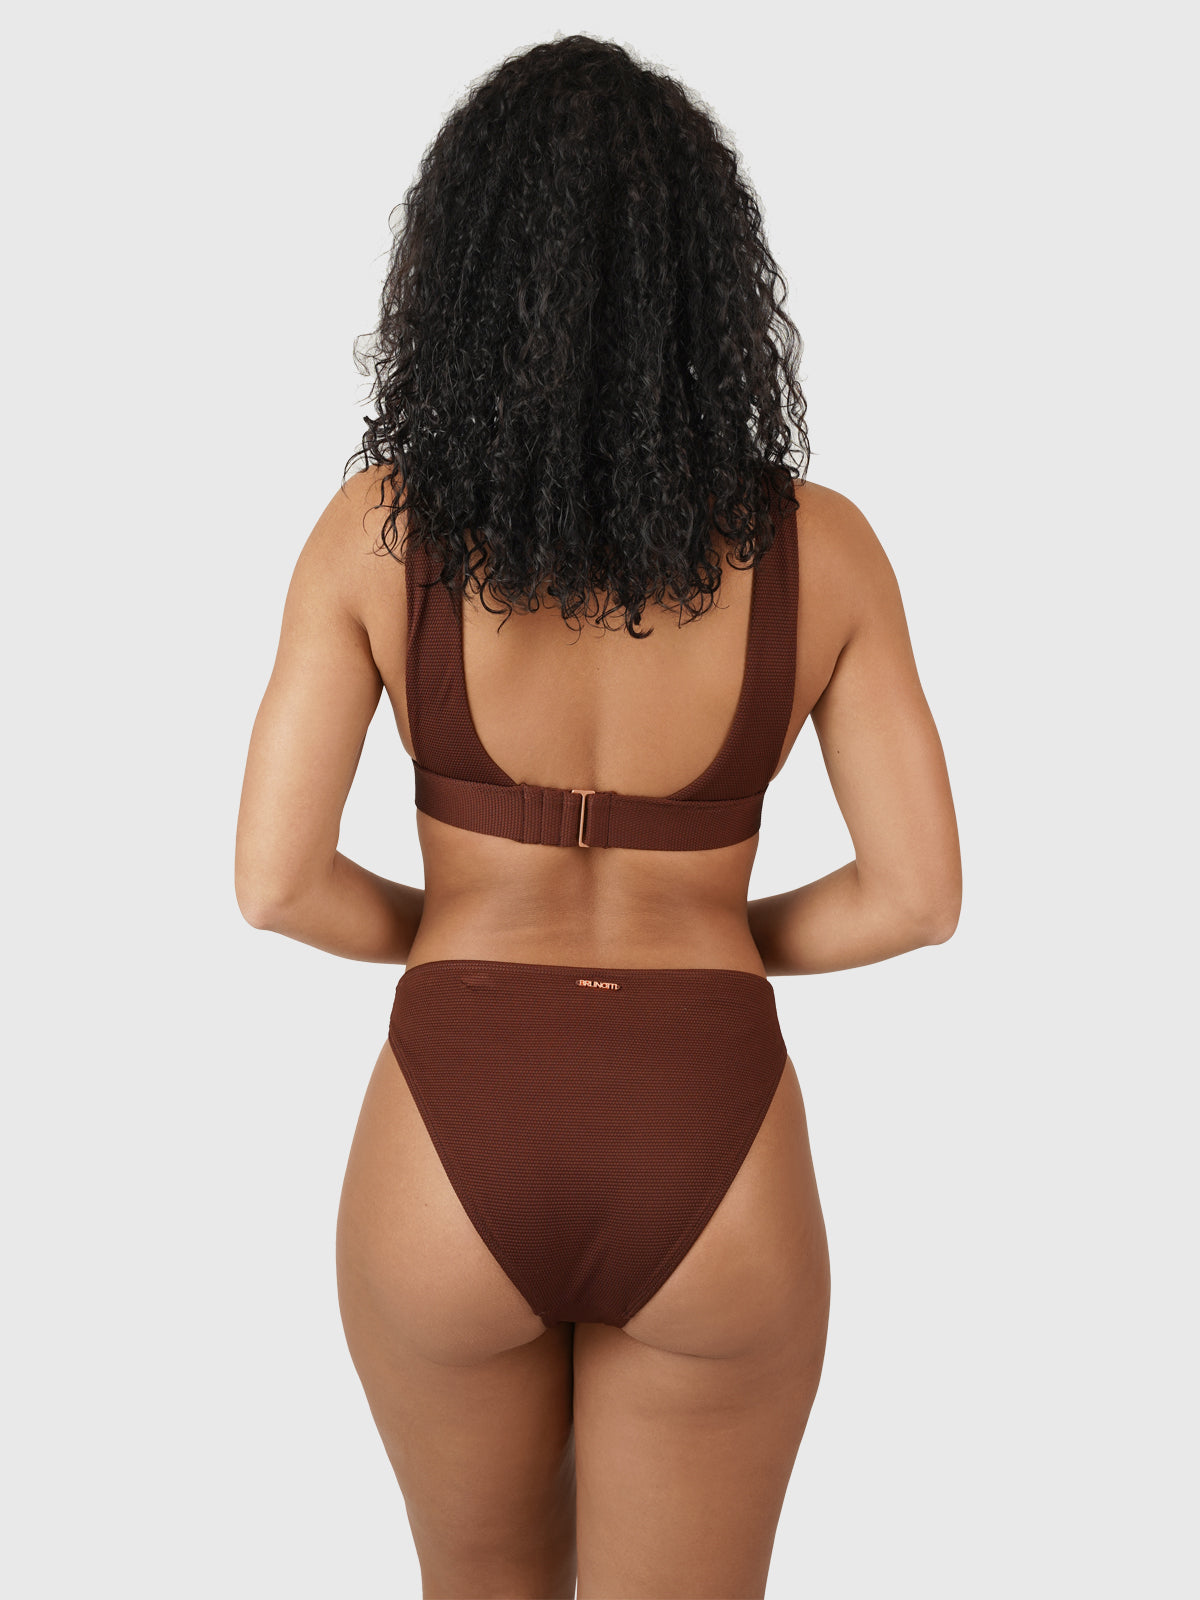 Bodhi-STR Damen Bralette Bikini Set | Braun